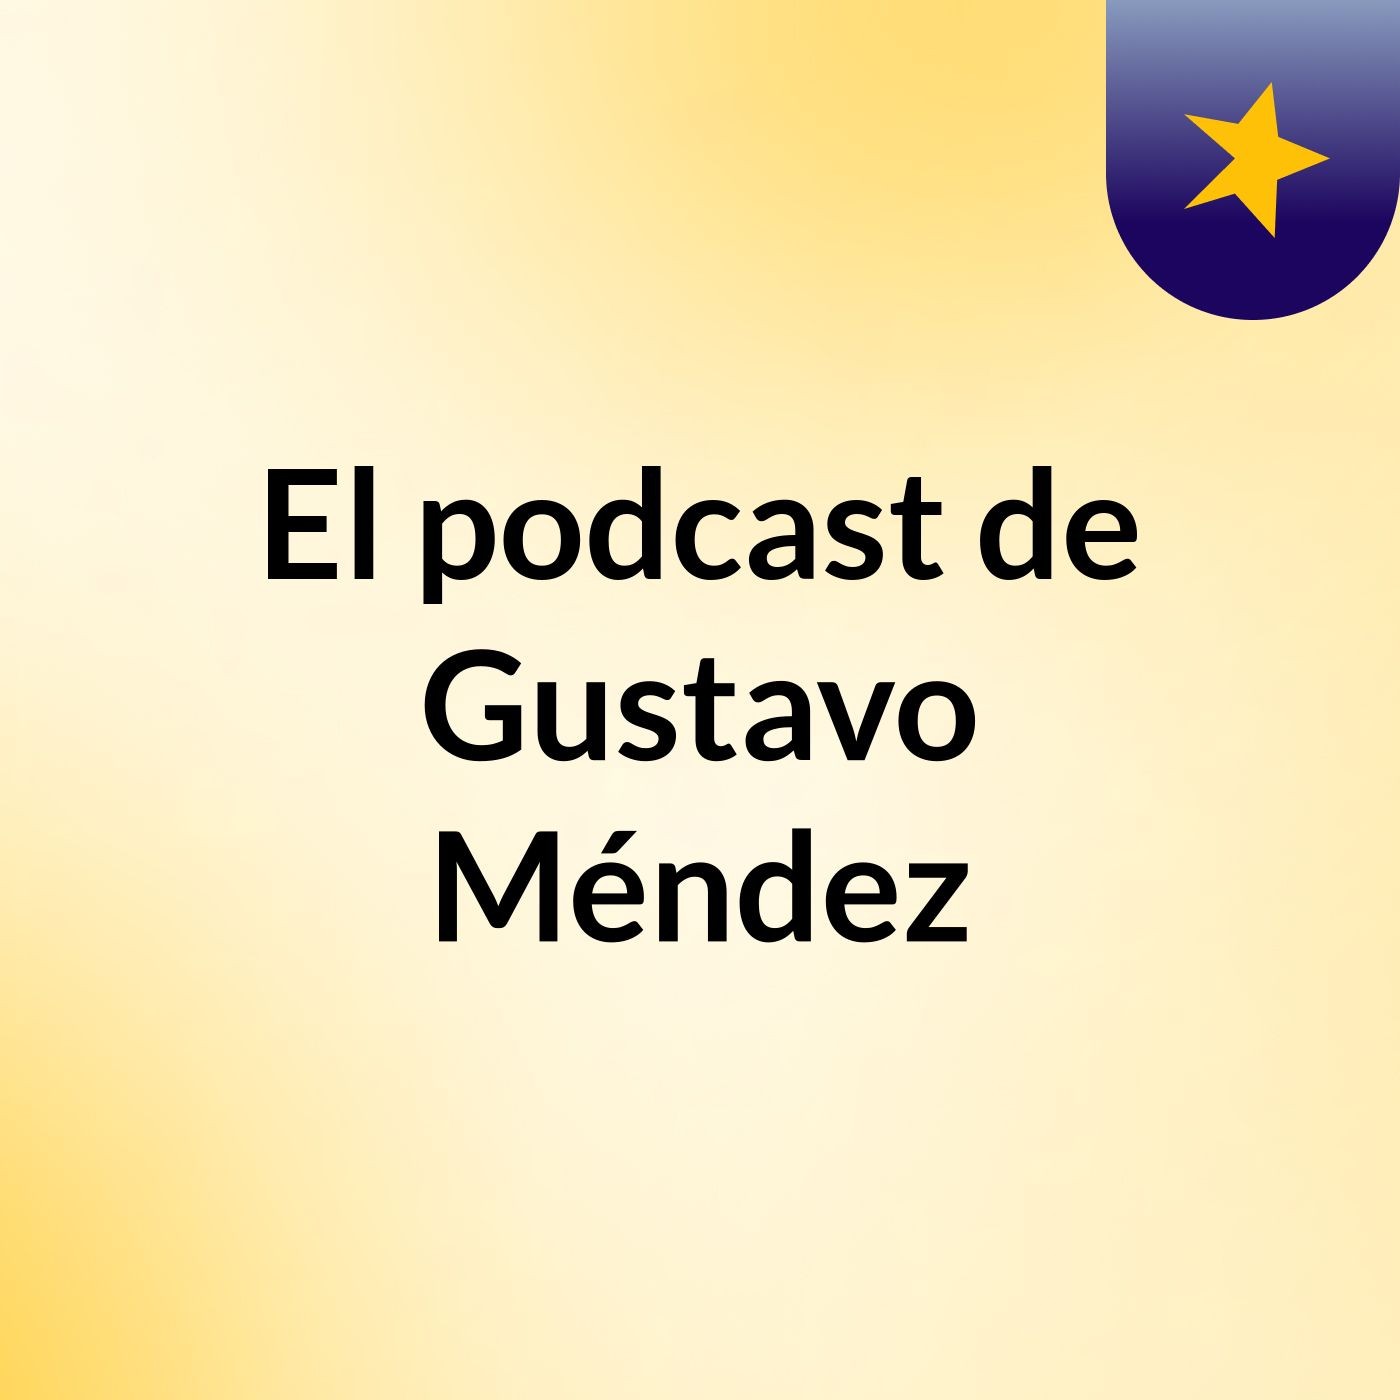 El podcast de Gustavo Méndez